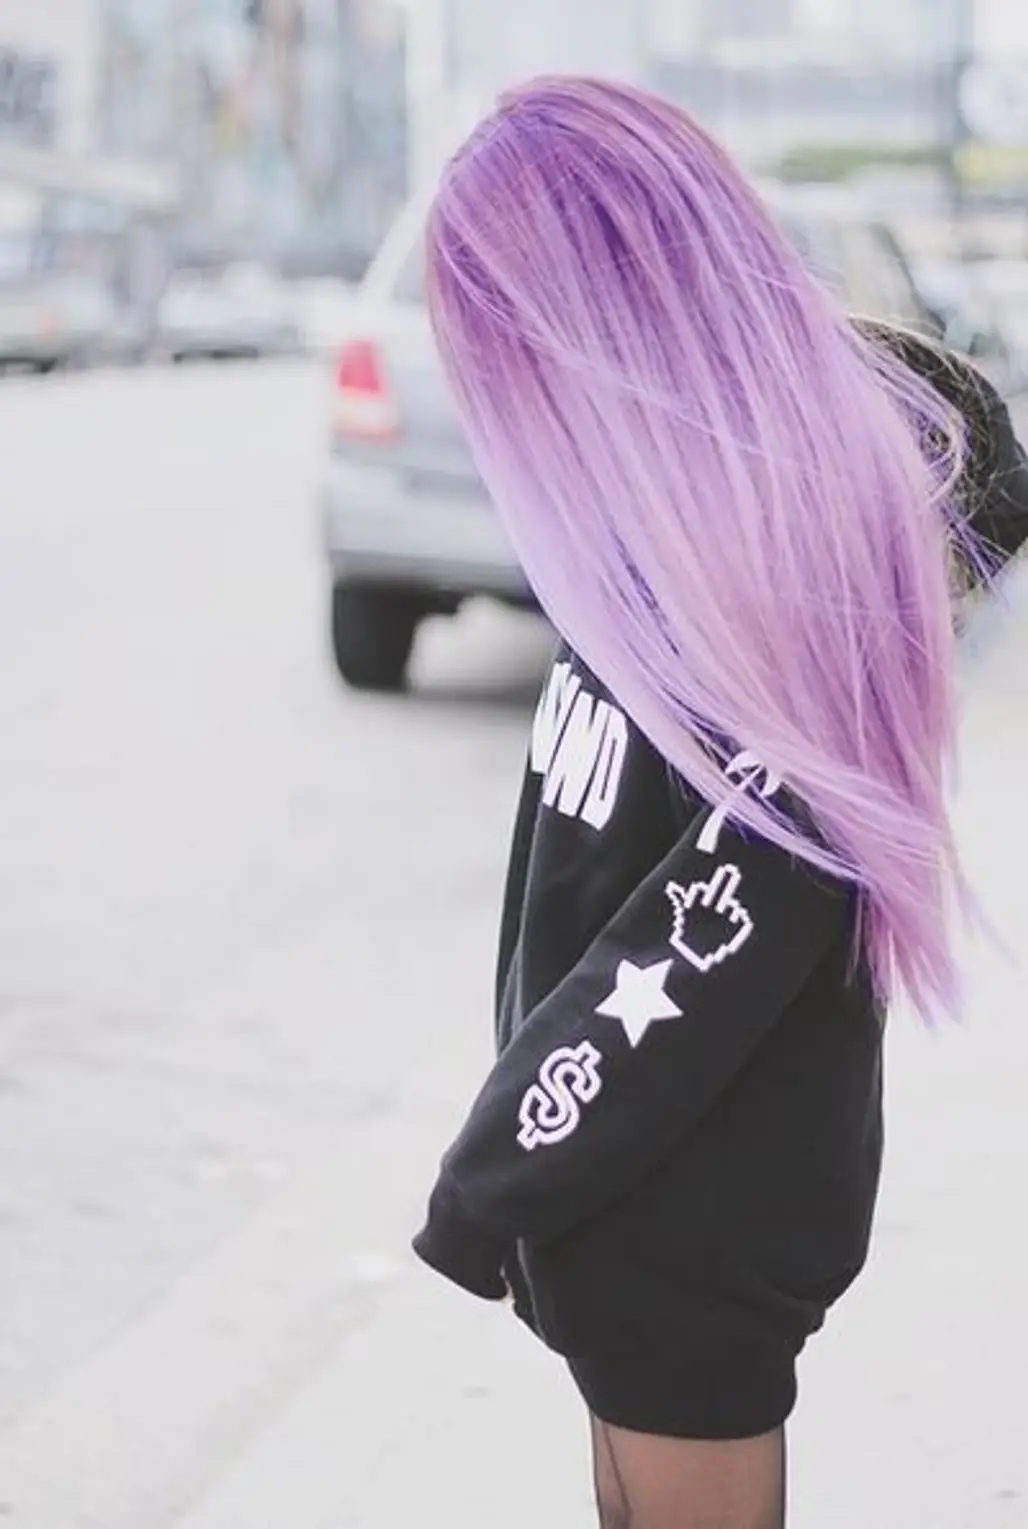 hair,pink,clothing,purple,cap,